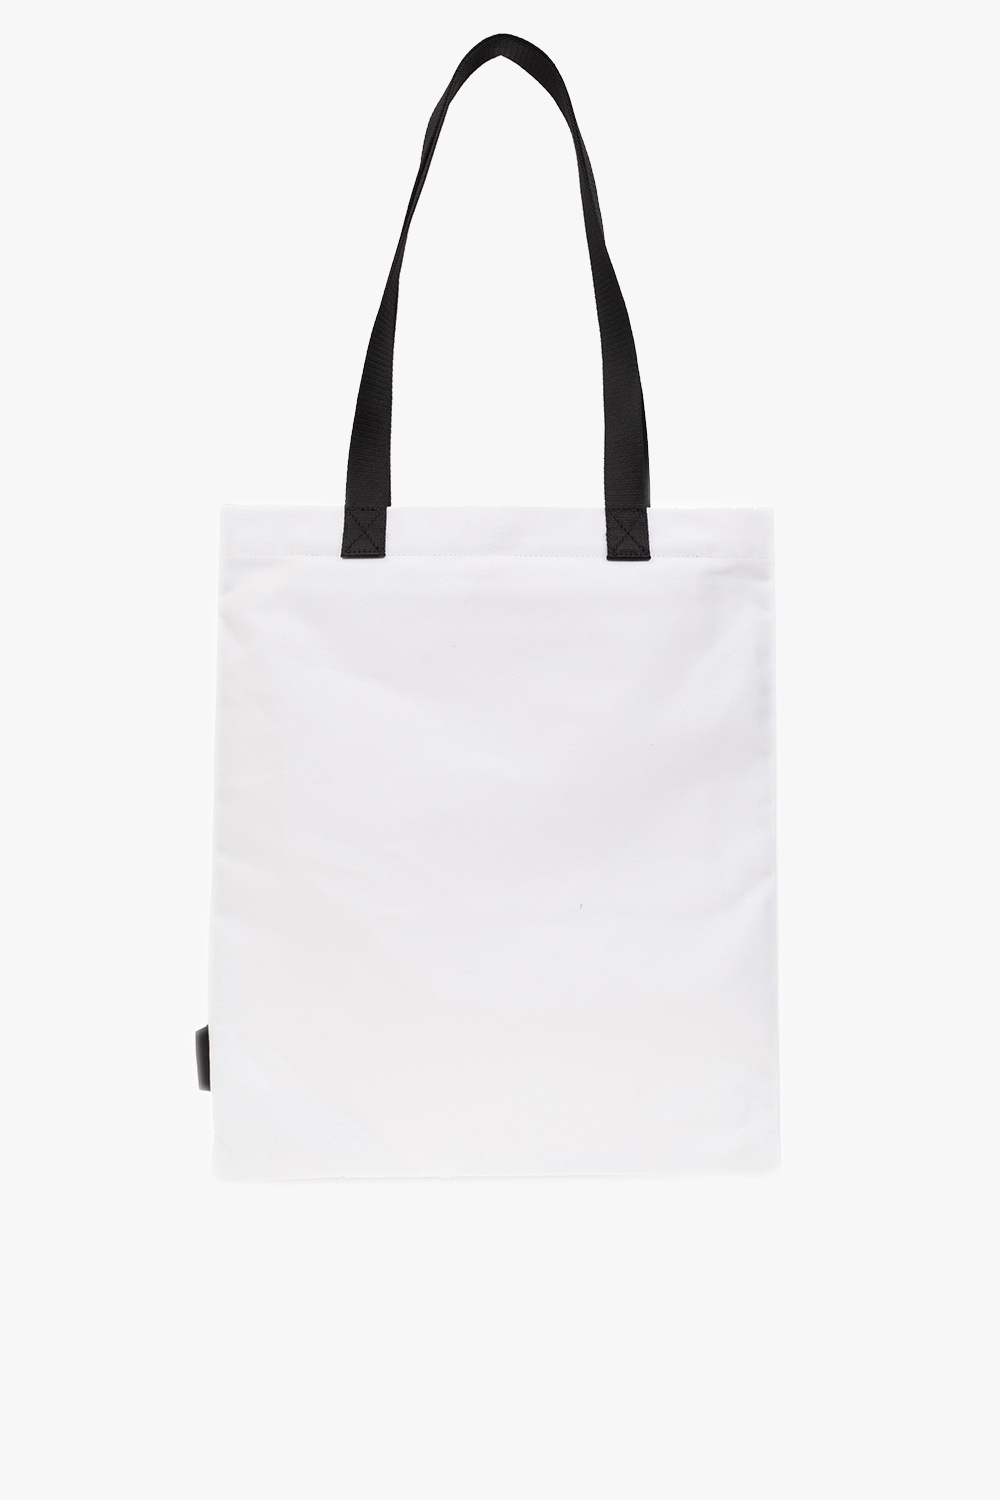 Dsquared2 Printed shopper bag